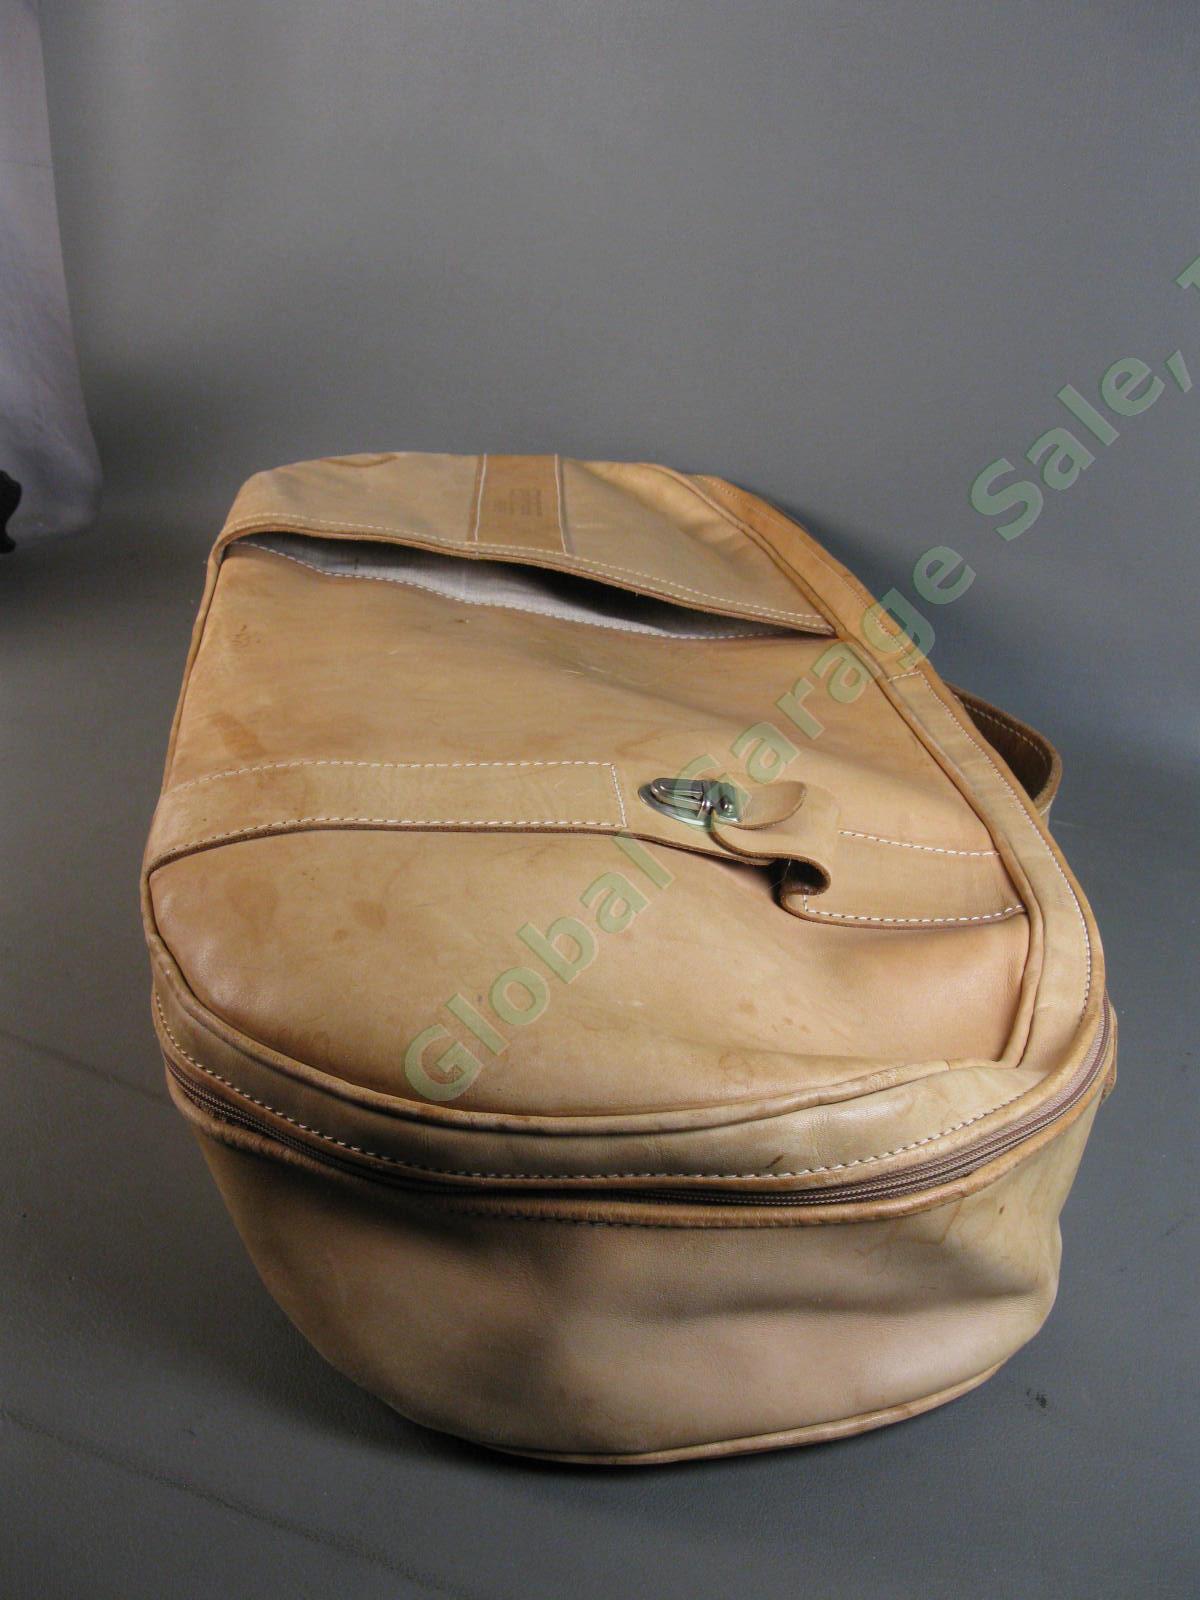 BREE Sports Leather Shoulder Tennis Travel Bag West Germany VINTAGE Luxury NR 2